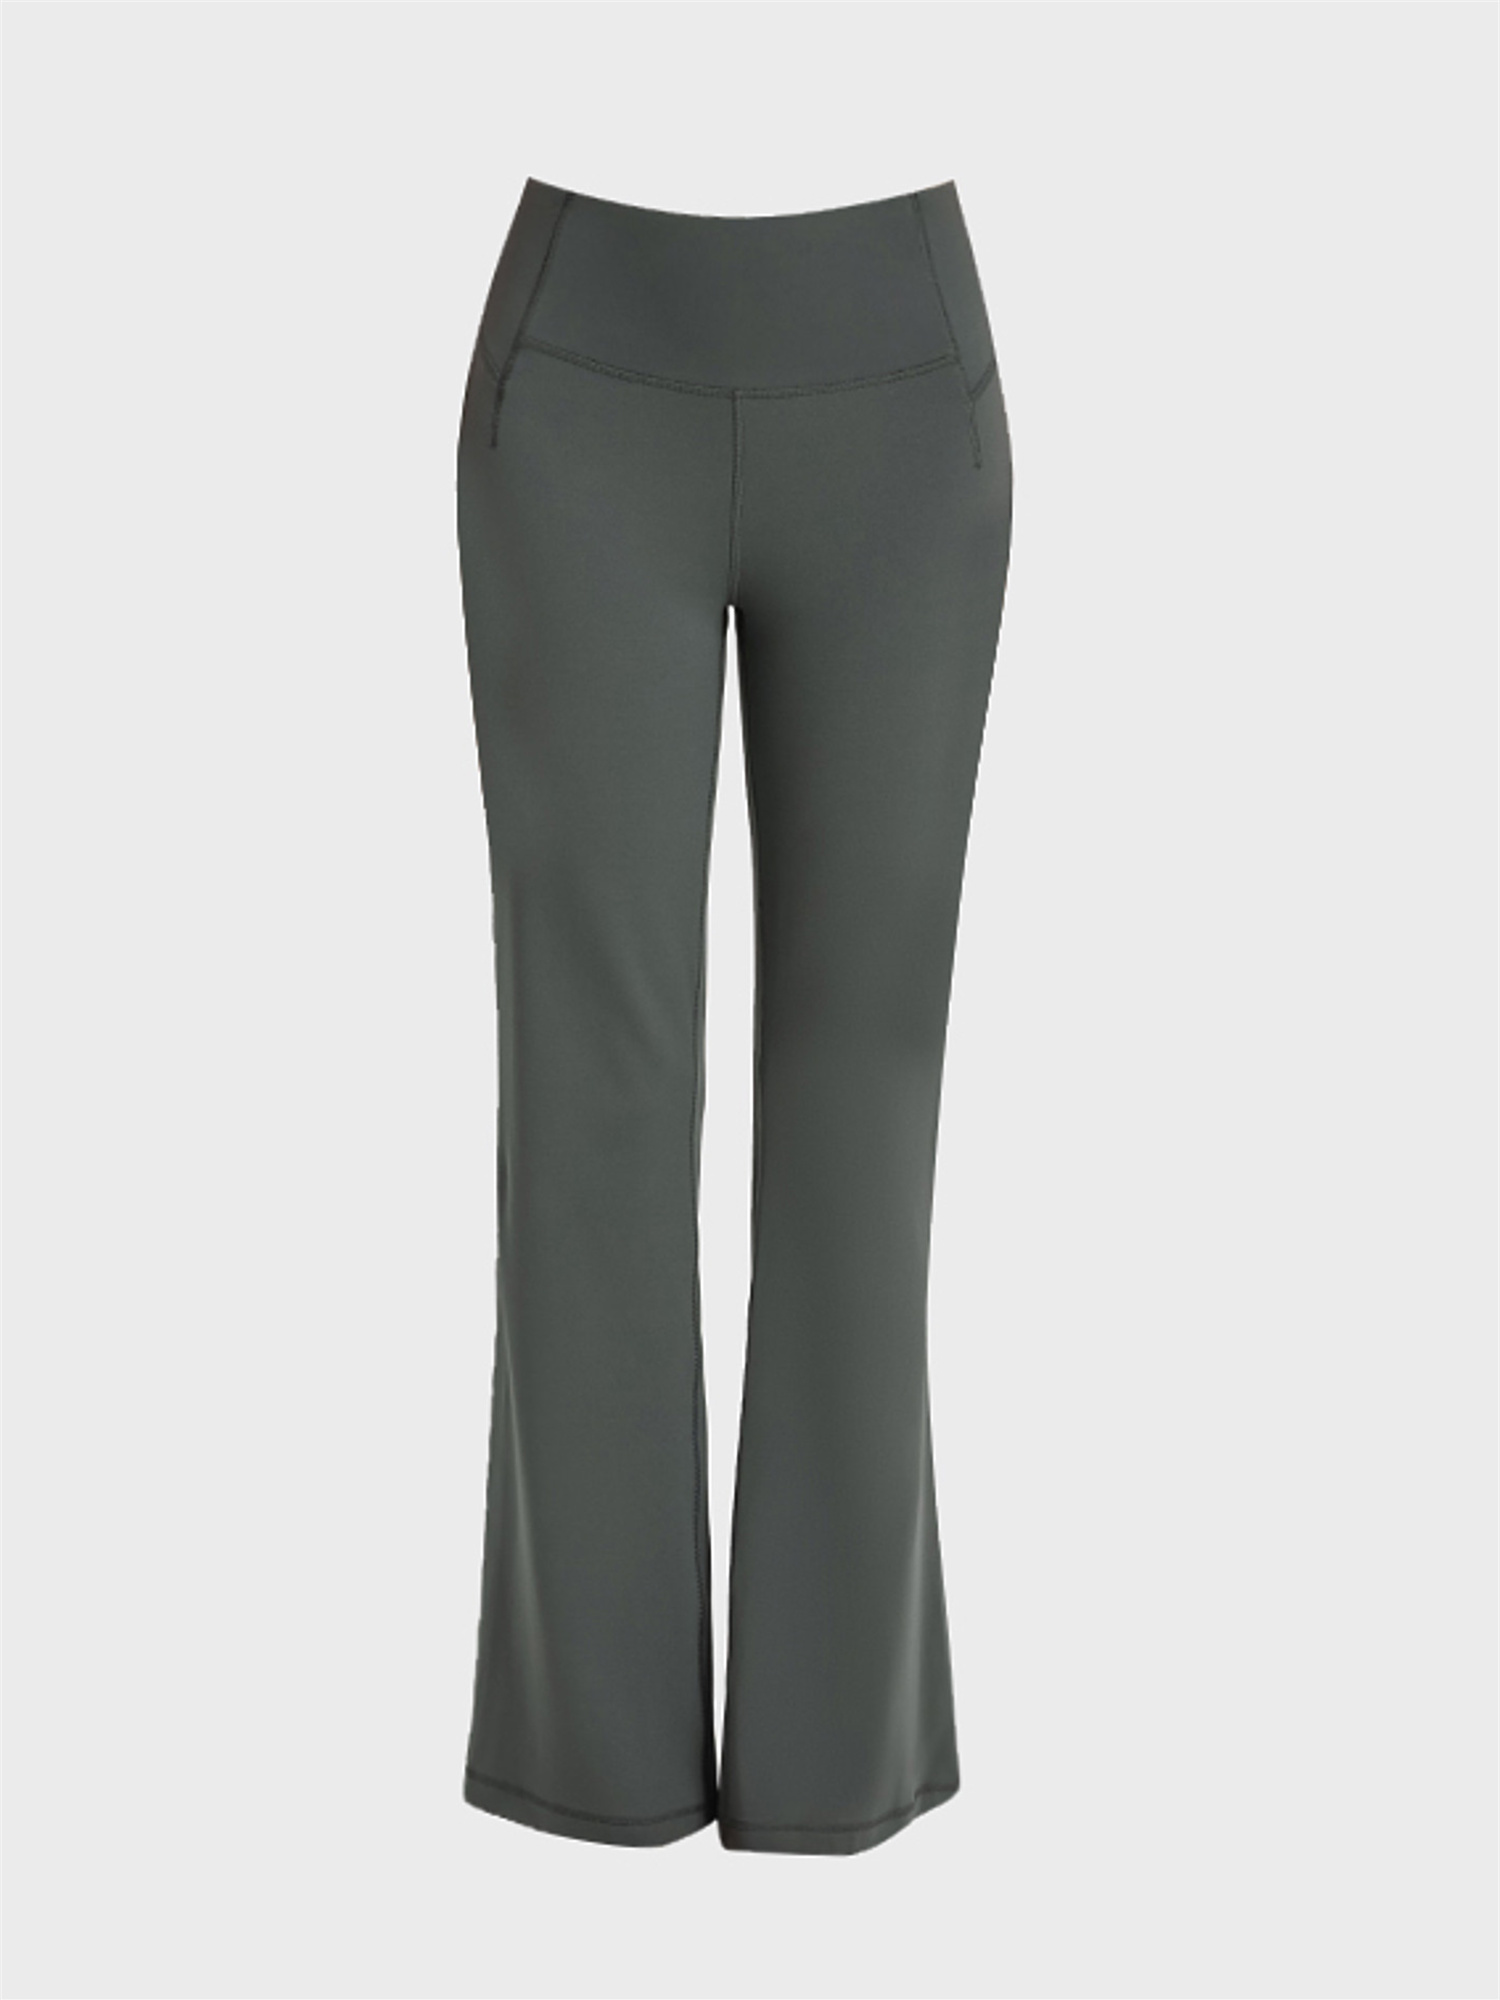 Grey Midsize Slim Flared Sports Pants with Side Split | Hemwave - Midsize Fashion